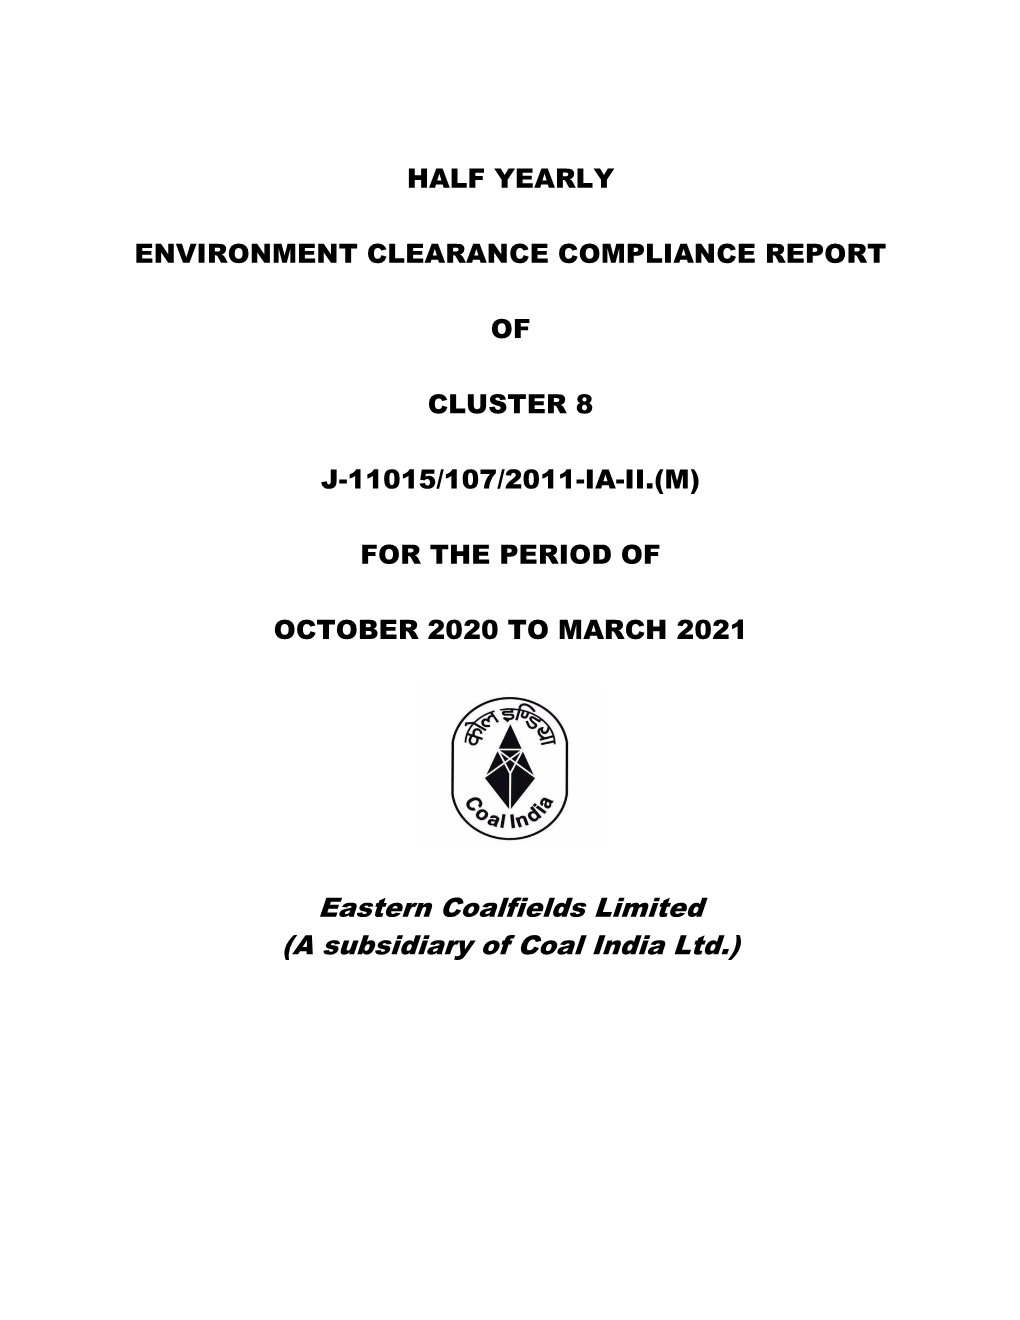 Eastern Coalfields Limited (A Subsidiary of Coal India Ltd.)